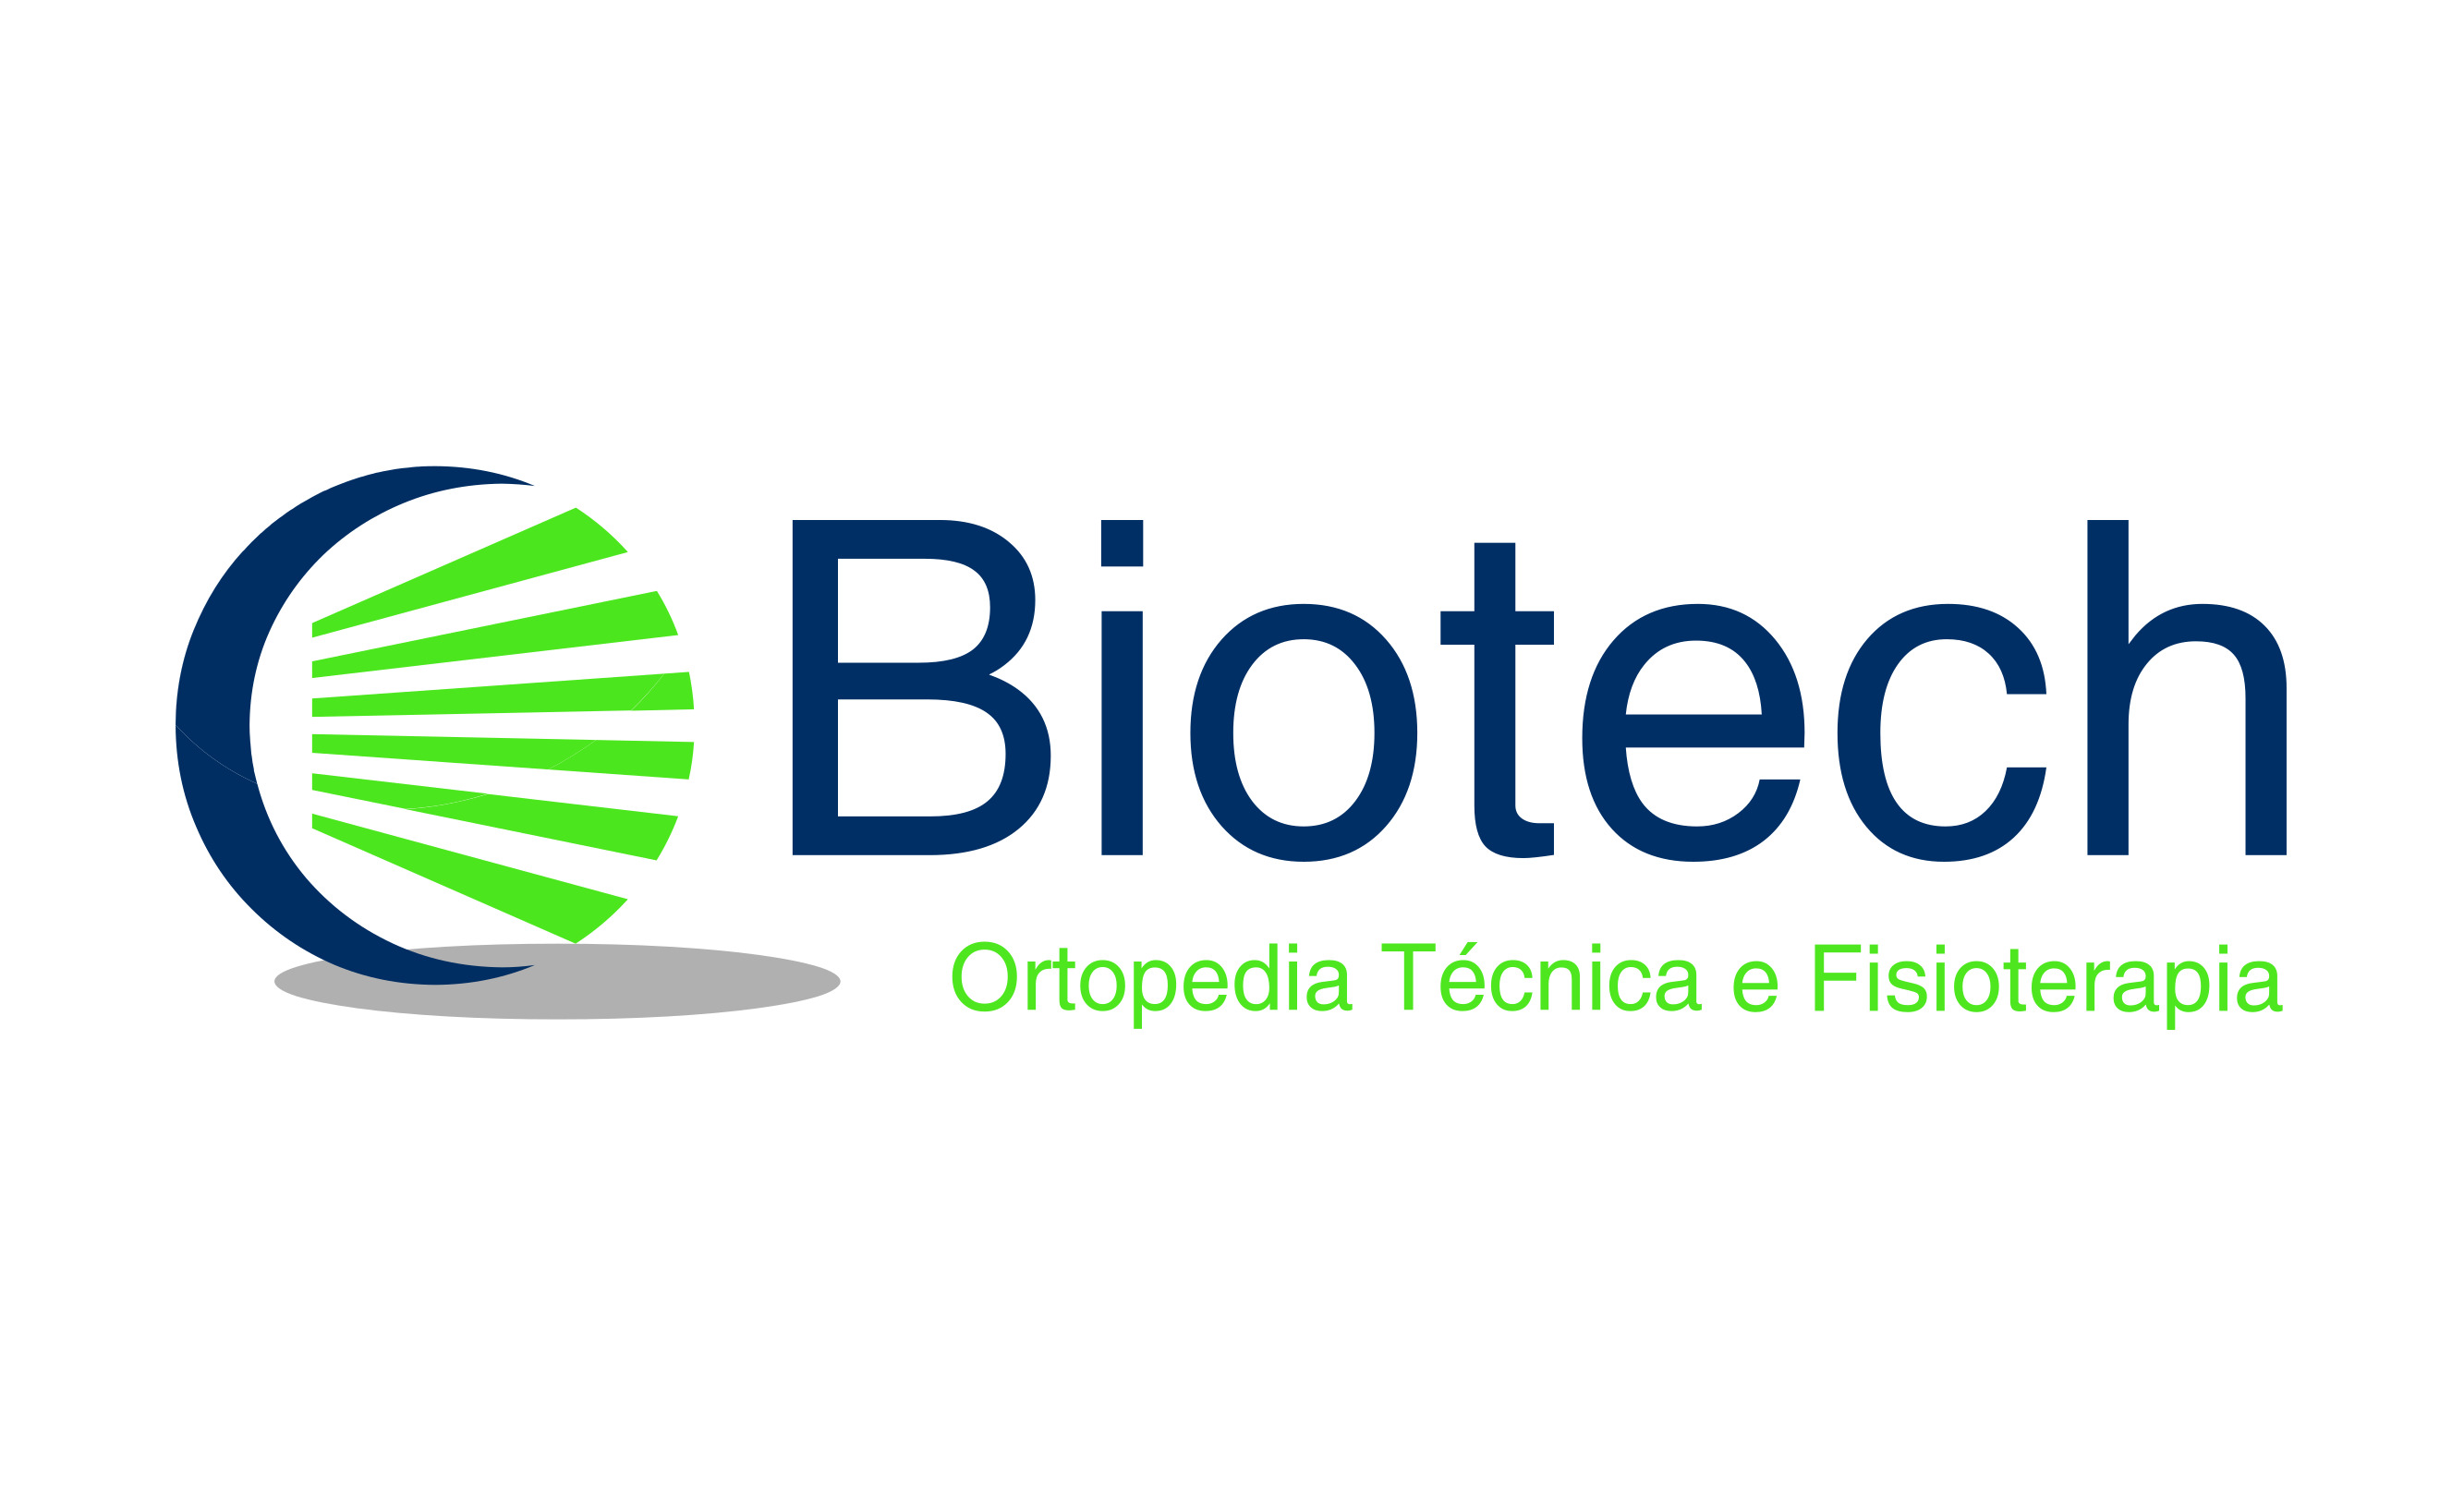 Biotech Ortopedia Técnica e Fisioterapia